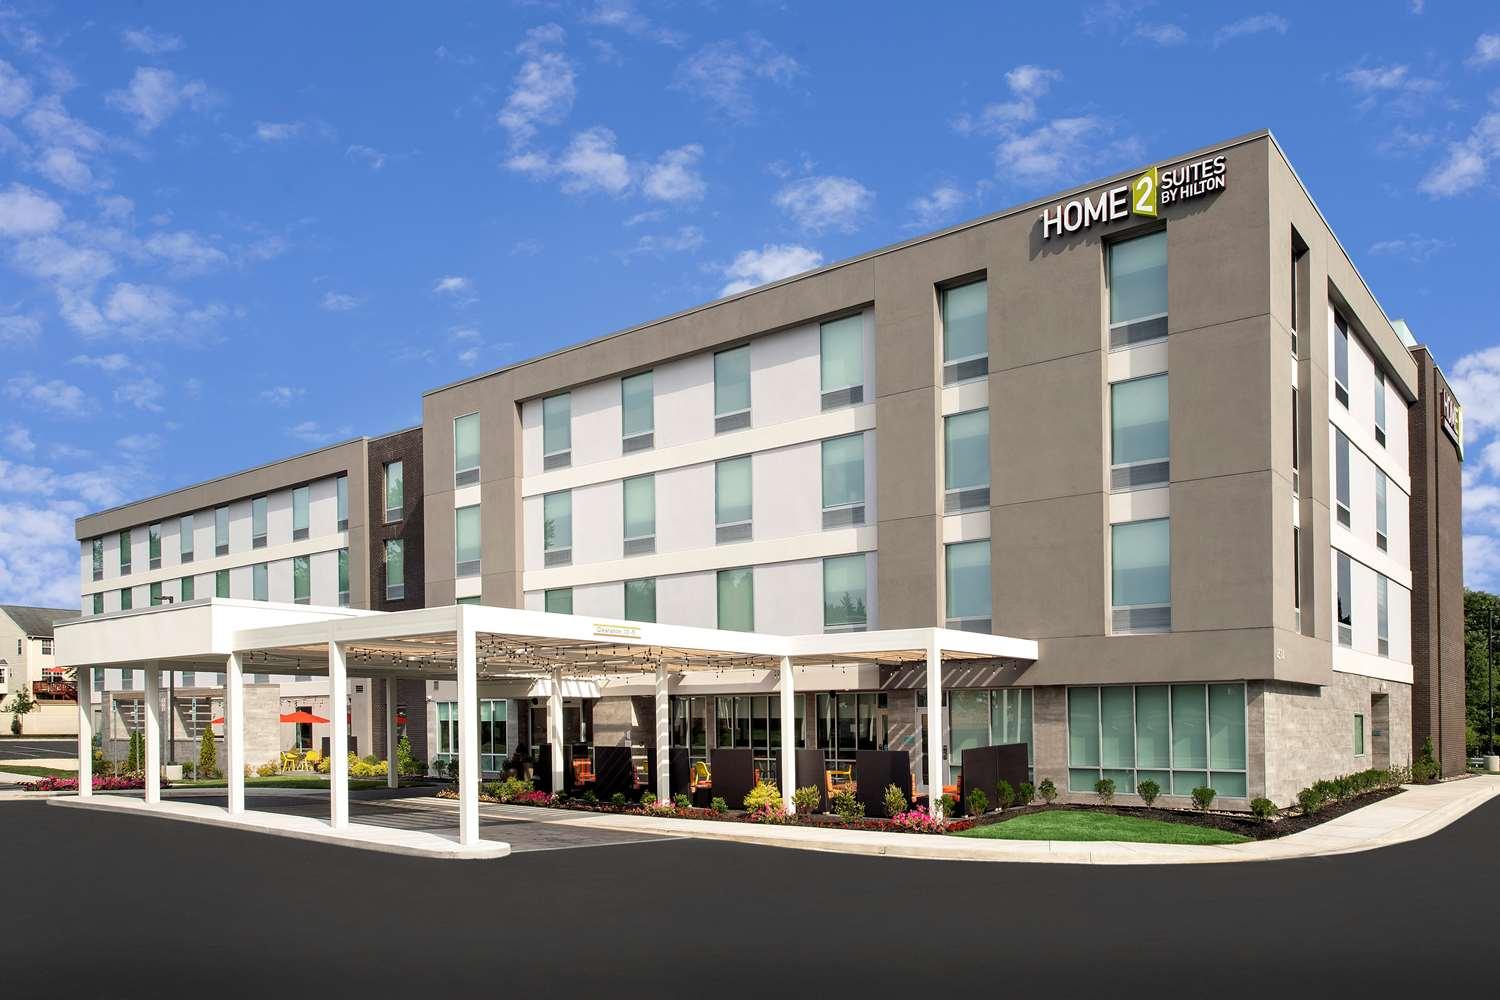 Home2 Suites by Hilton Owings Mills in Owings Mills, MD